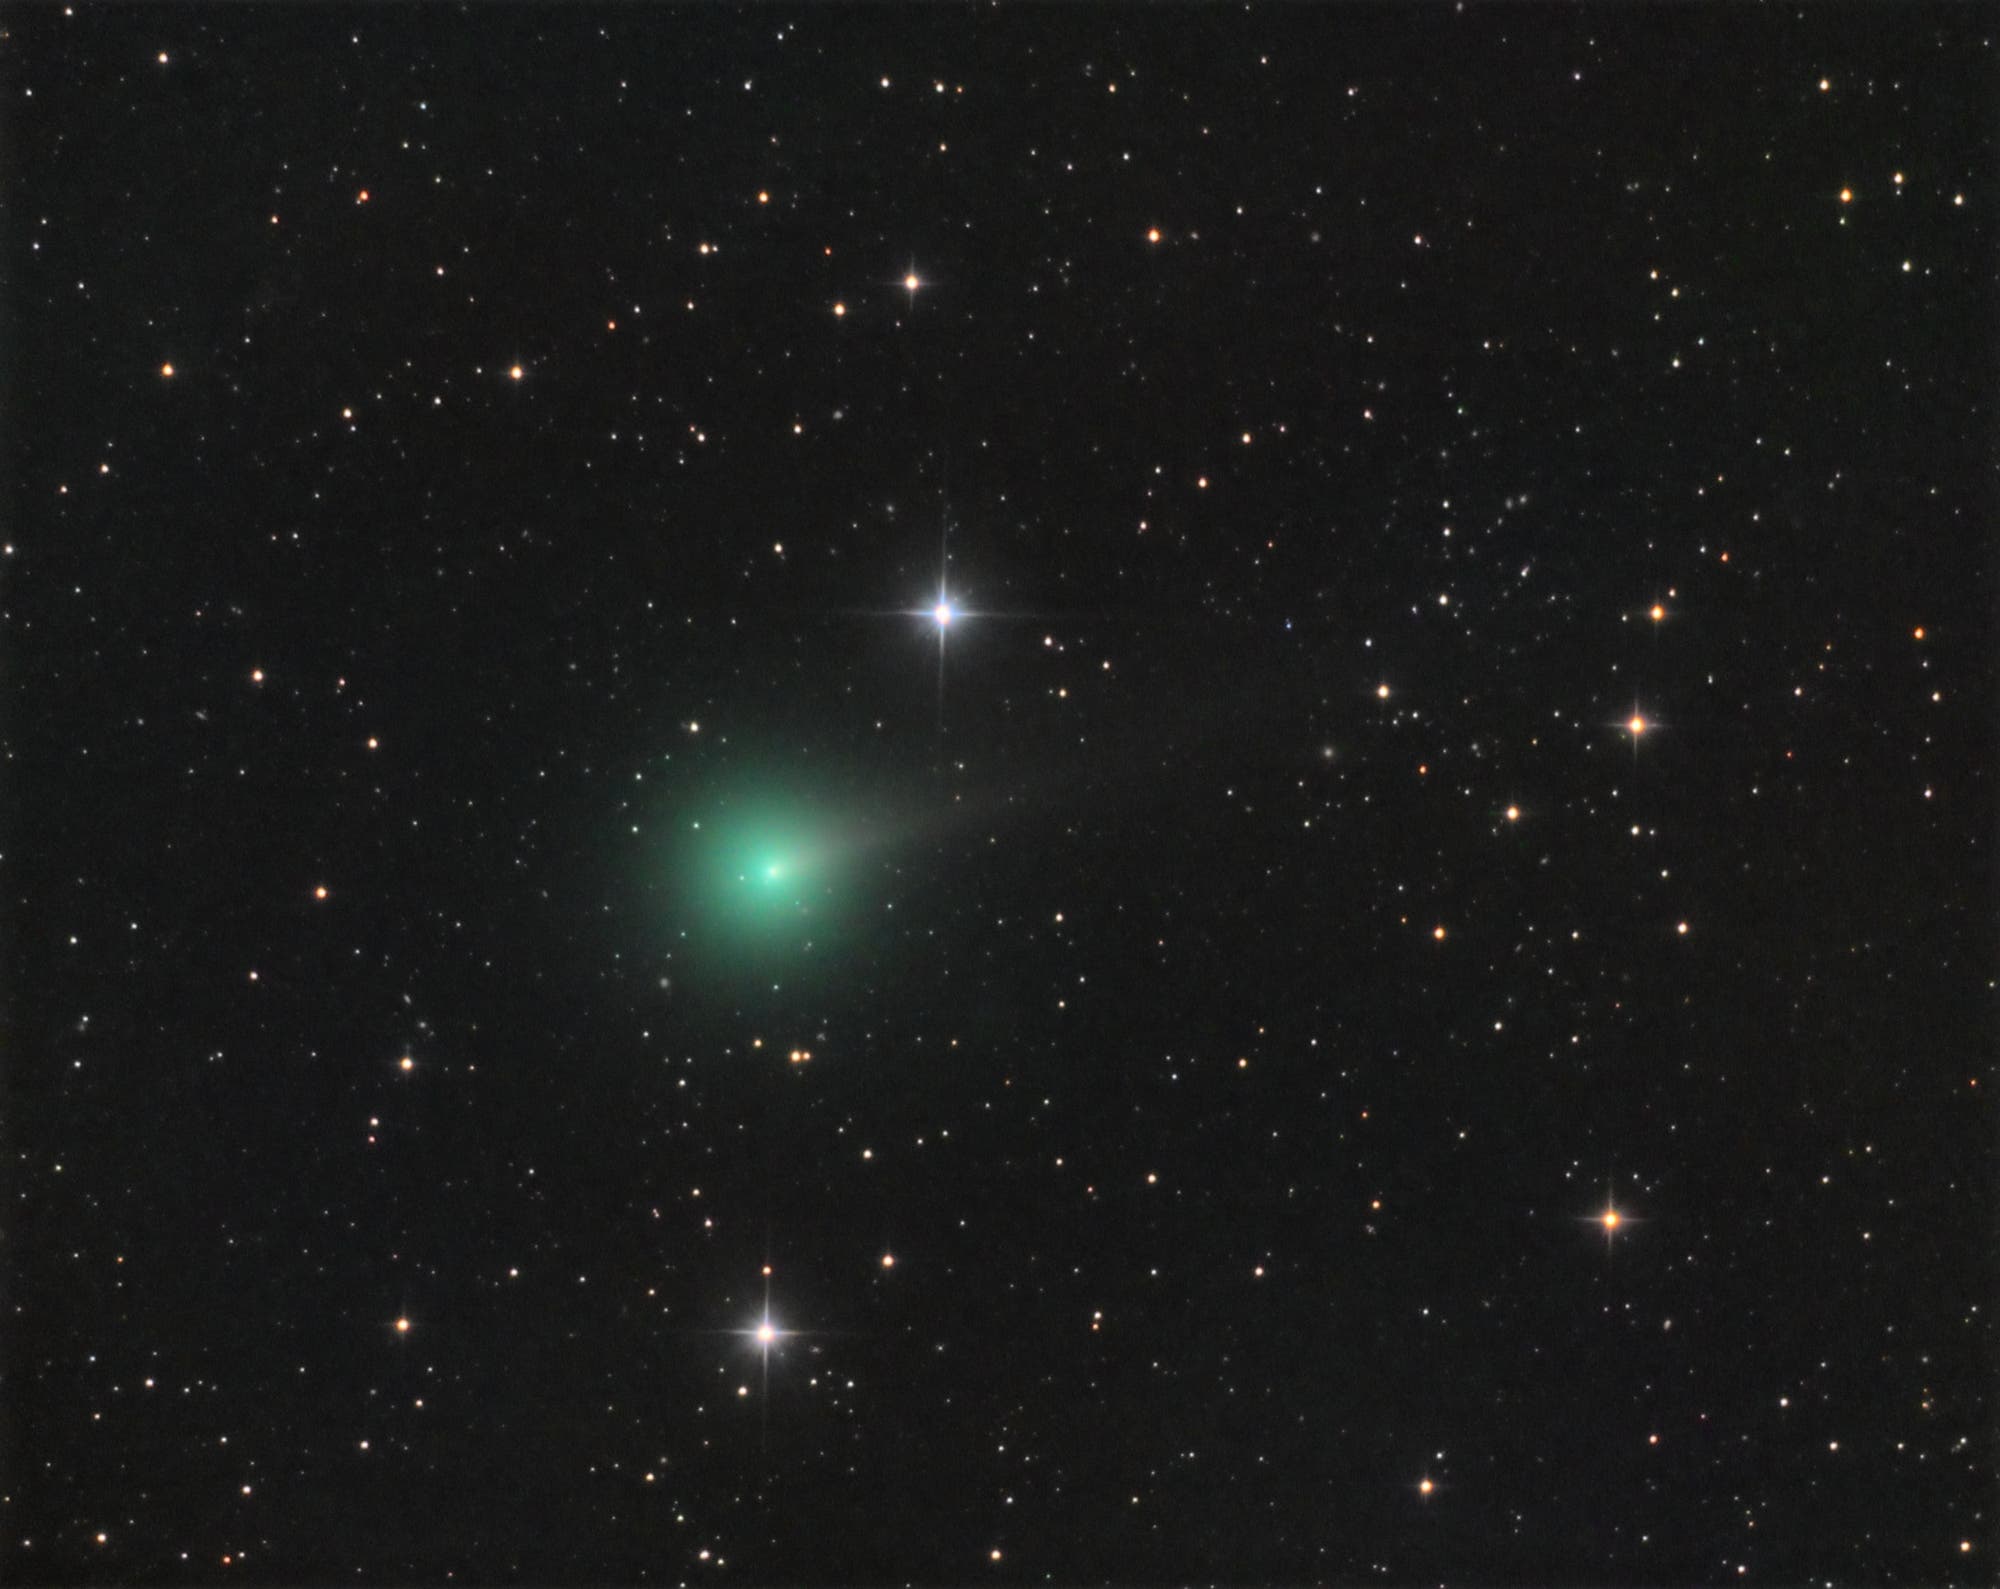 Comet 62P/Tsuchinshan